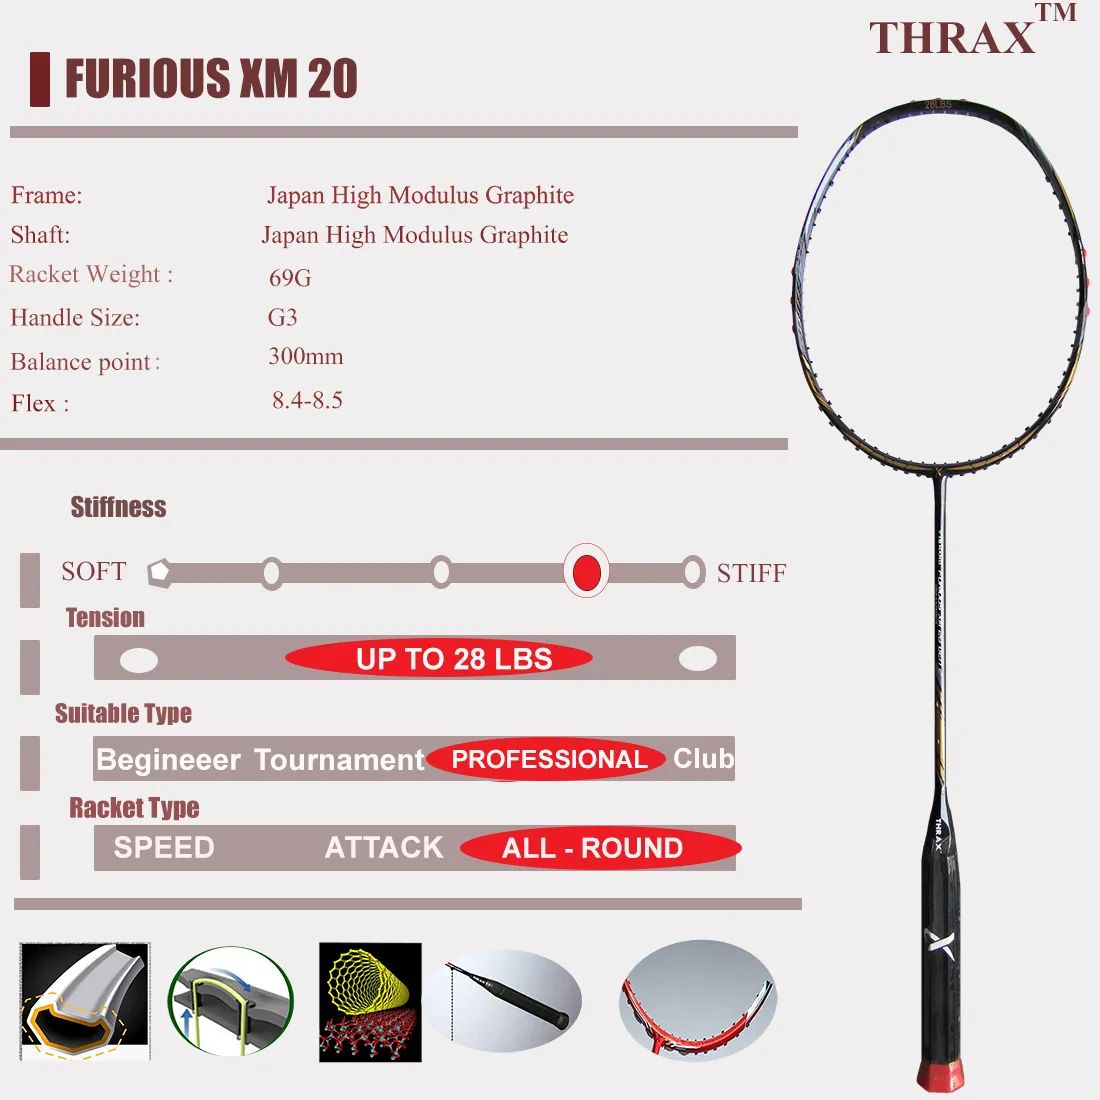 Thrax_Furious_XM_20_Badminton_Racket_Specification_AB